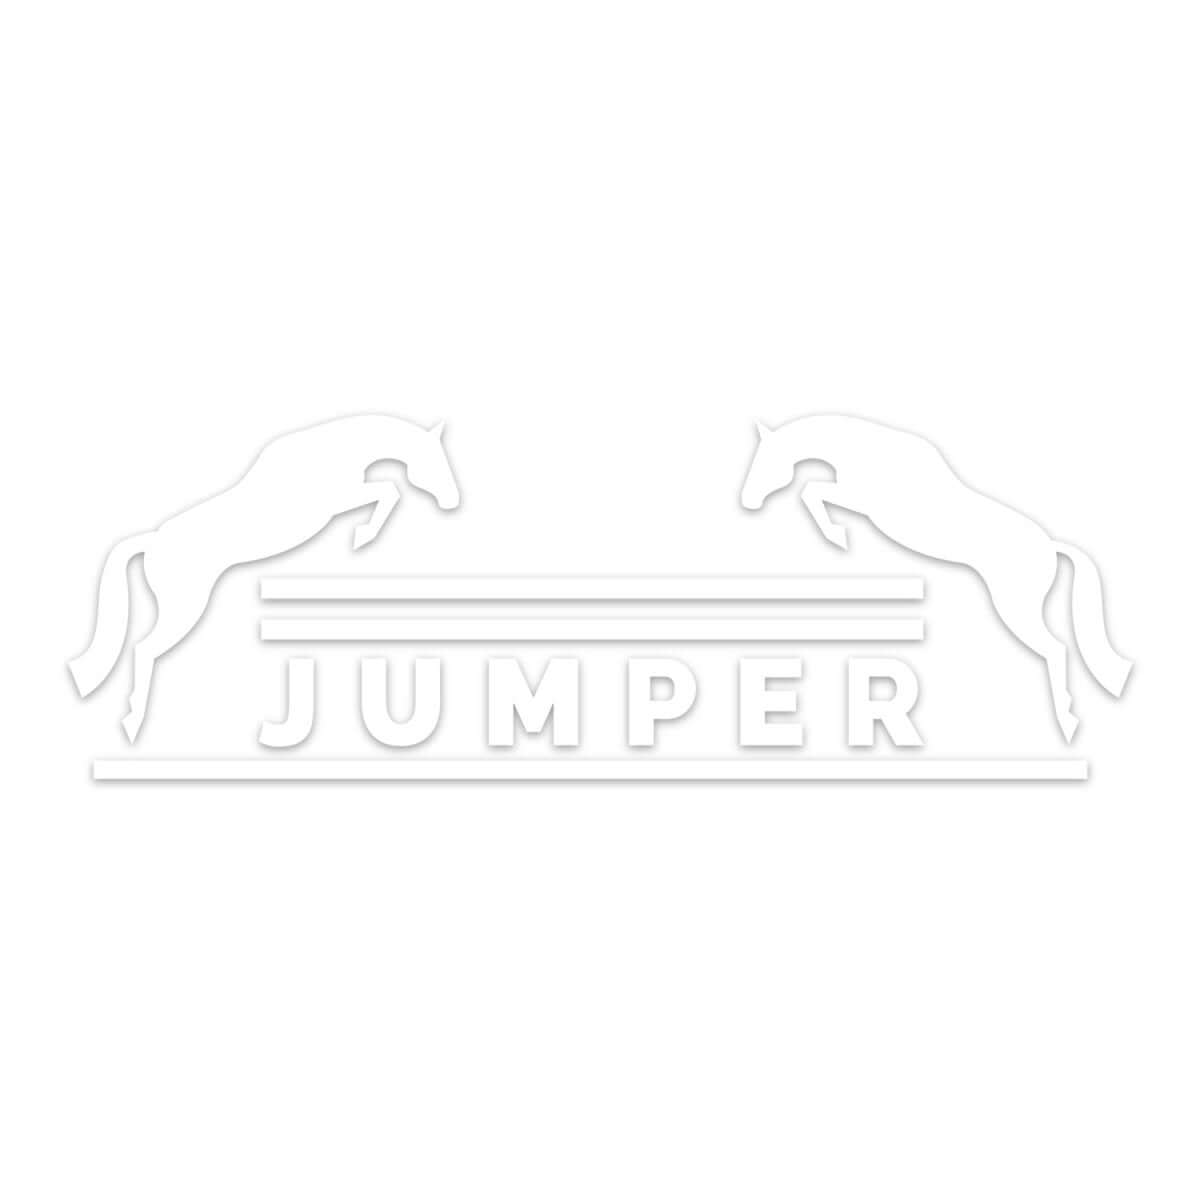 Jumper - Vinyl Decal by Dapplebay